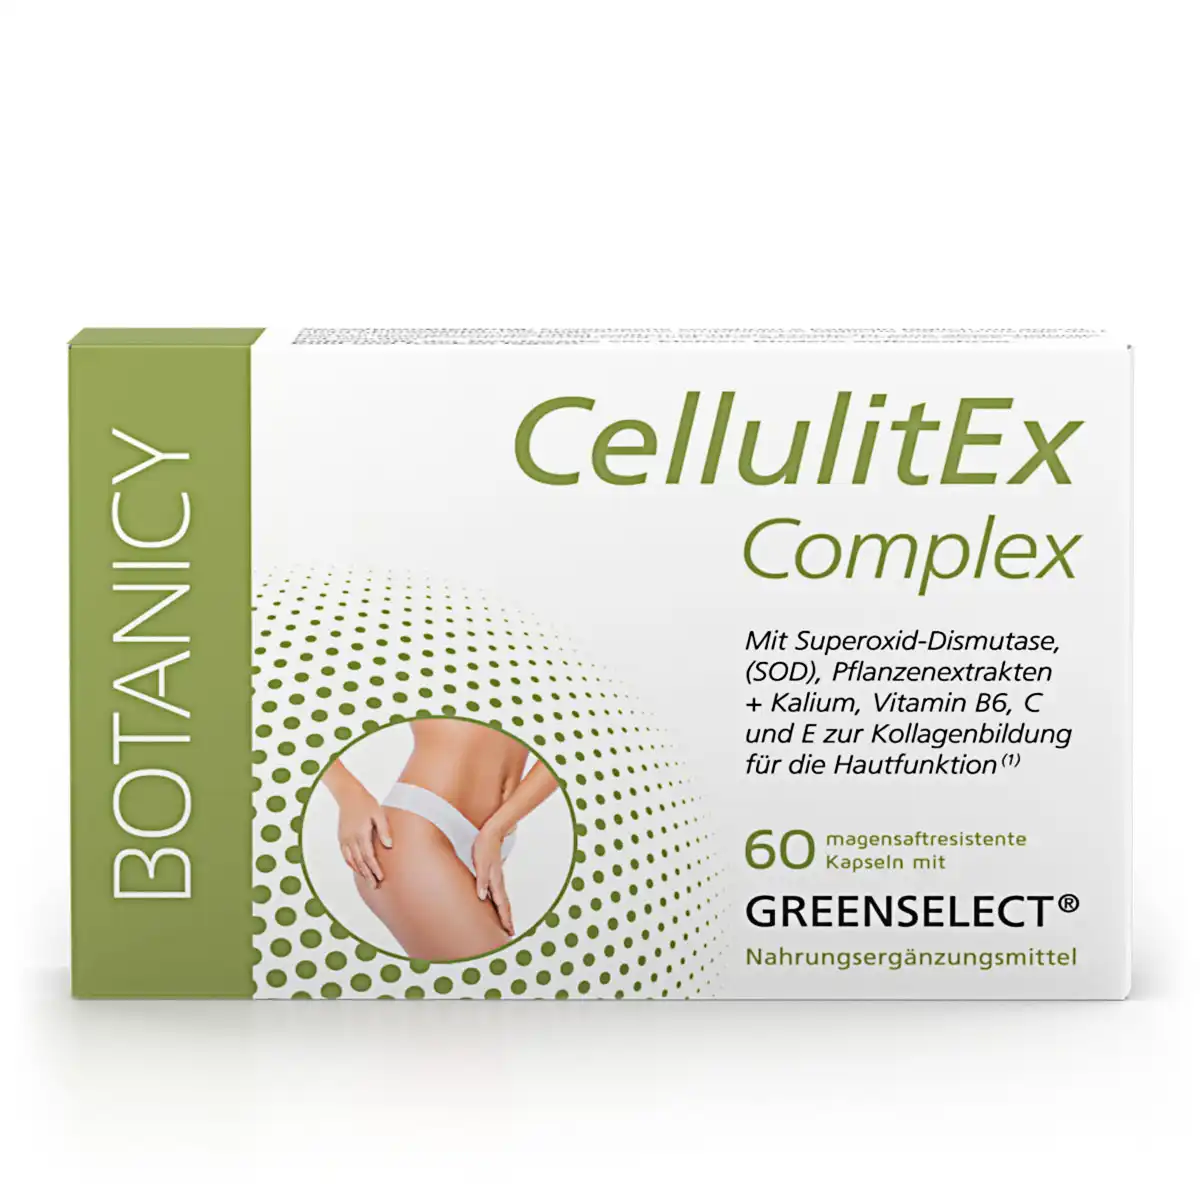 CellulitEx Complex